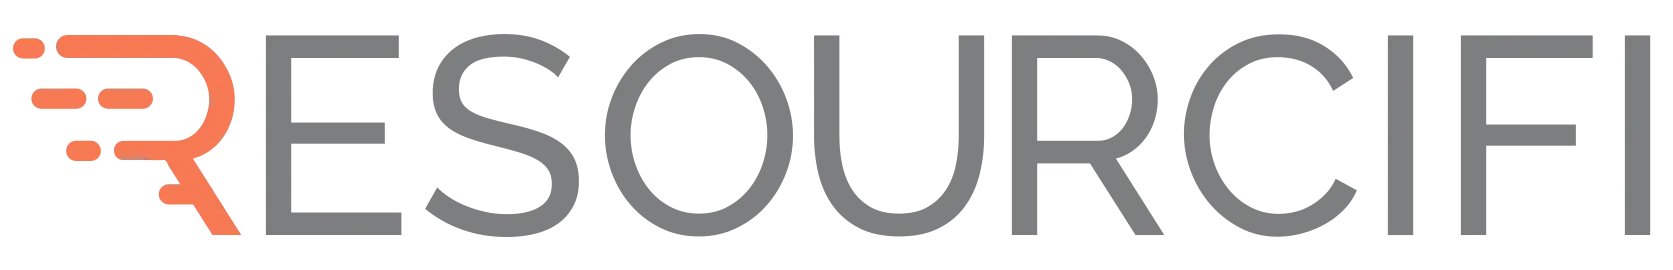 Resourcifi - A staff augmentation company logo